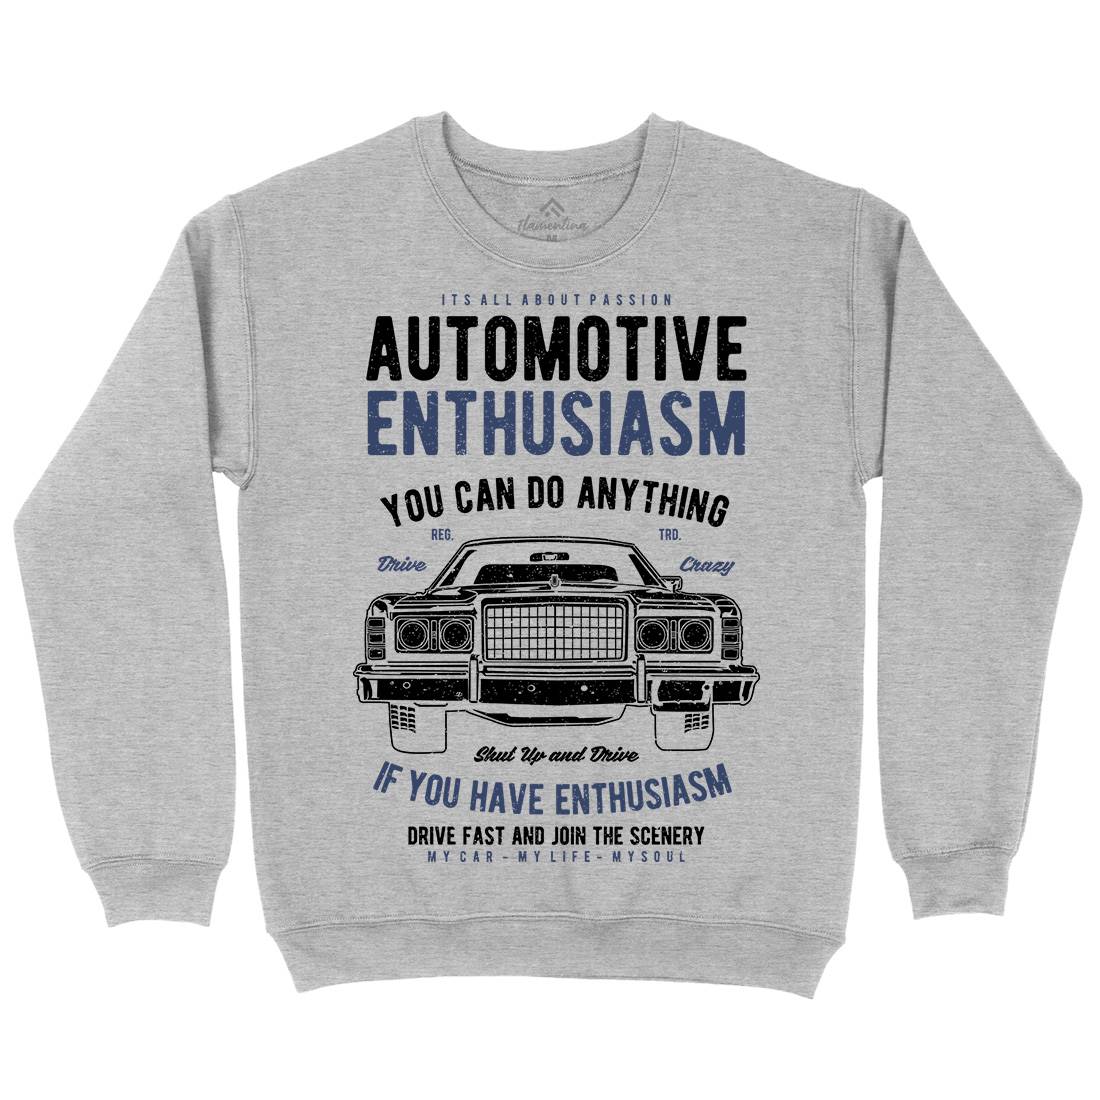 Automotive Enthusiasm Kids Crew Neck Sweatshirt Cars A614